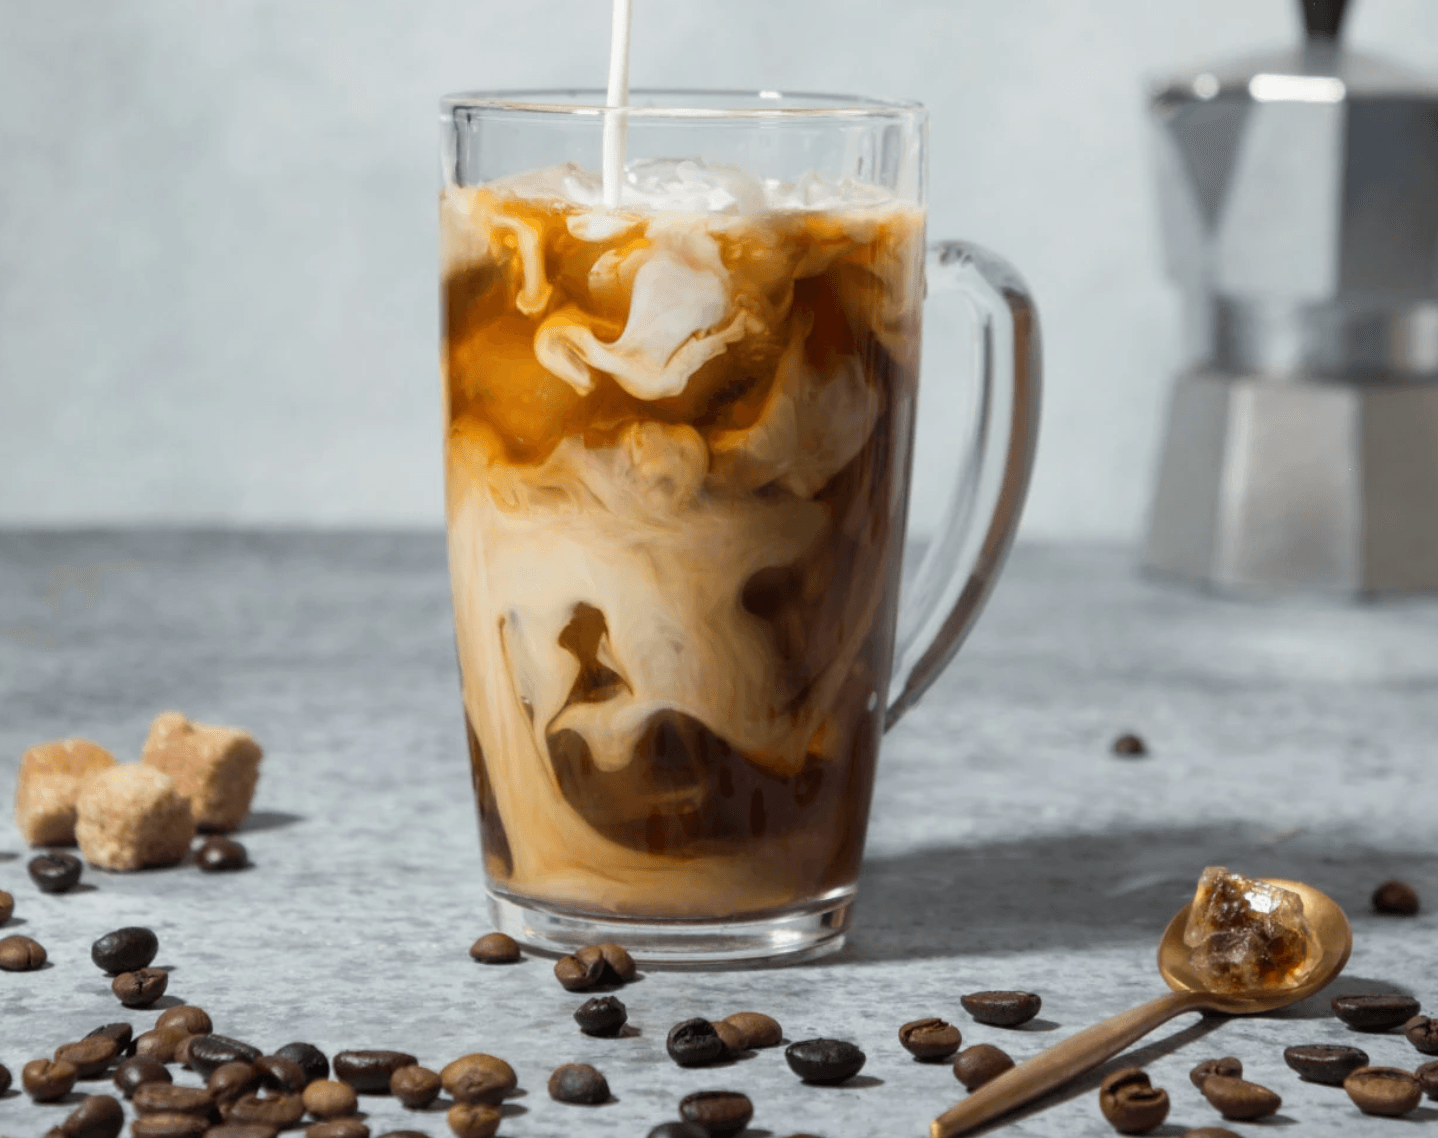 moksha caffeine free mushroom coffee with milk poured in